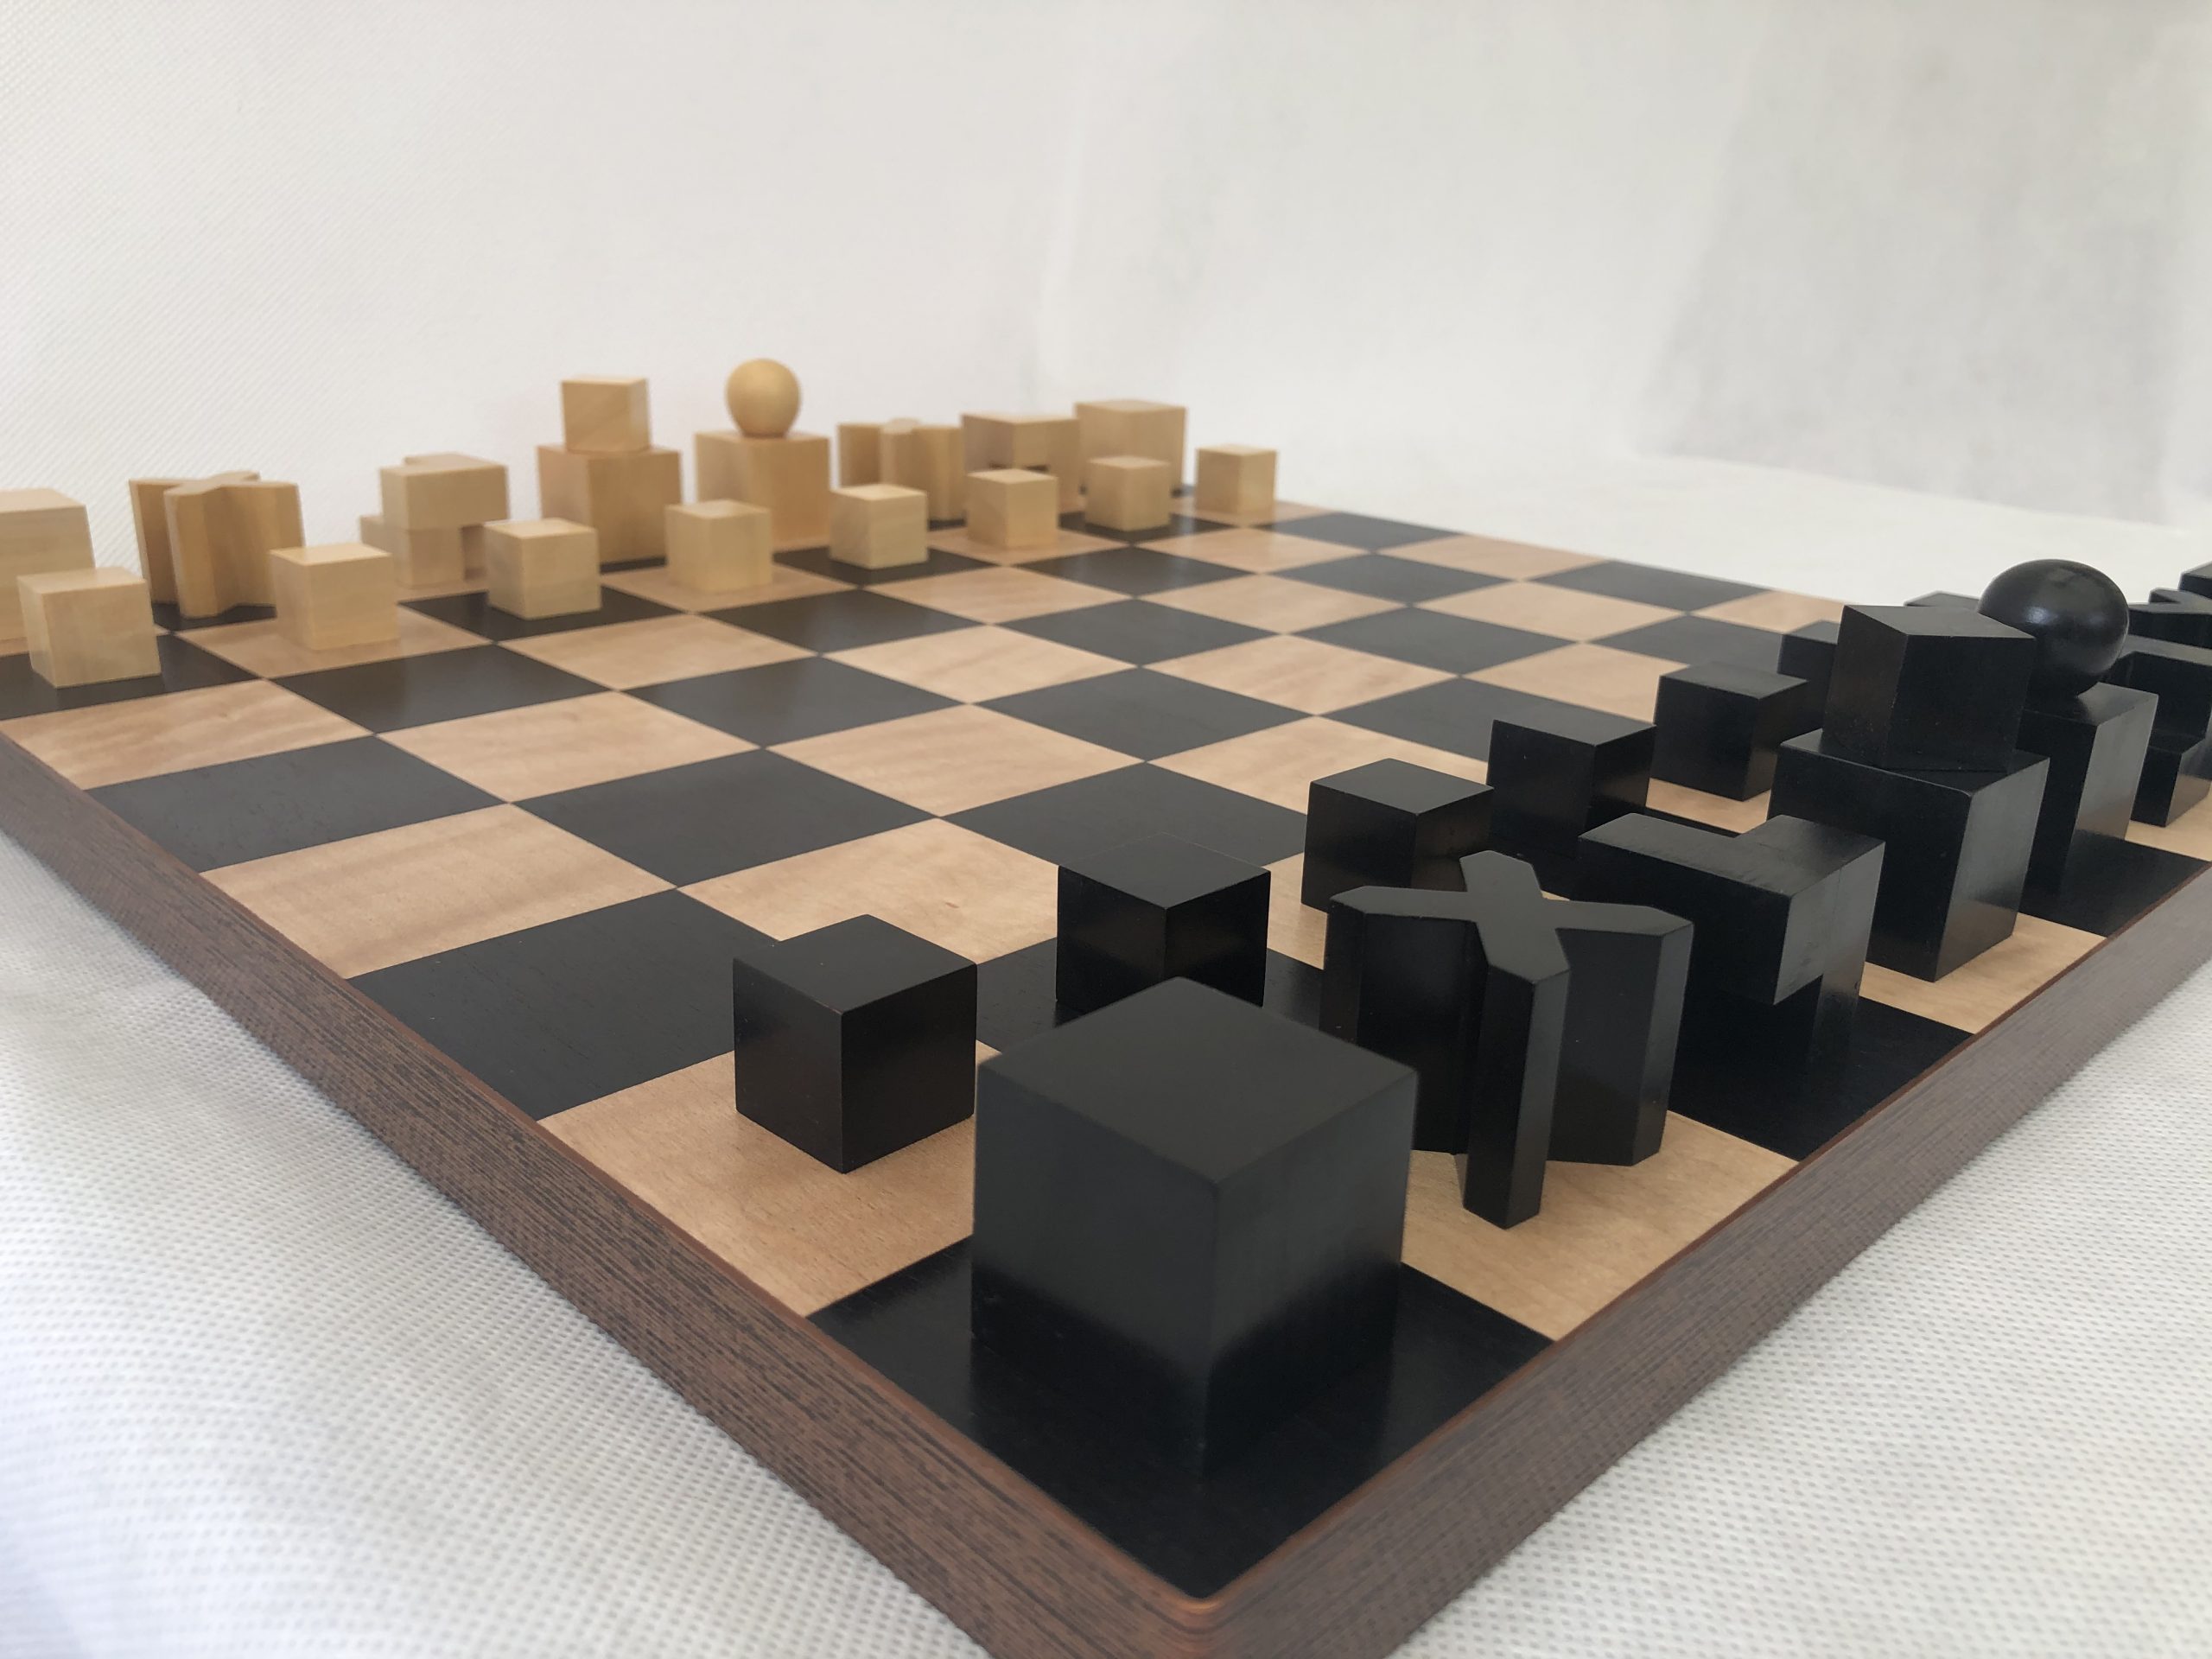 The Bauhaus Chess Board